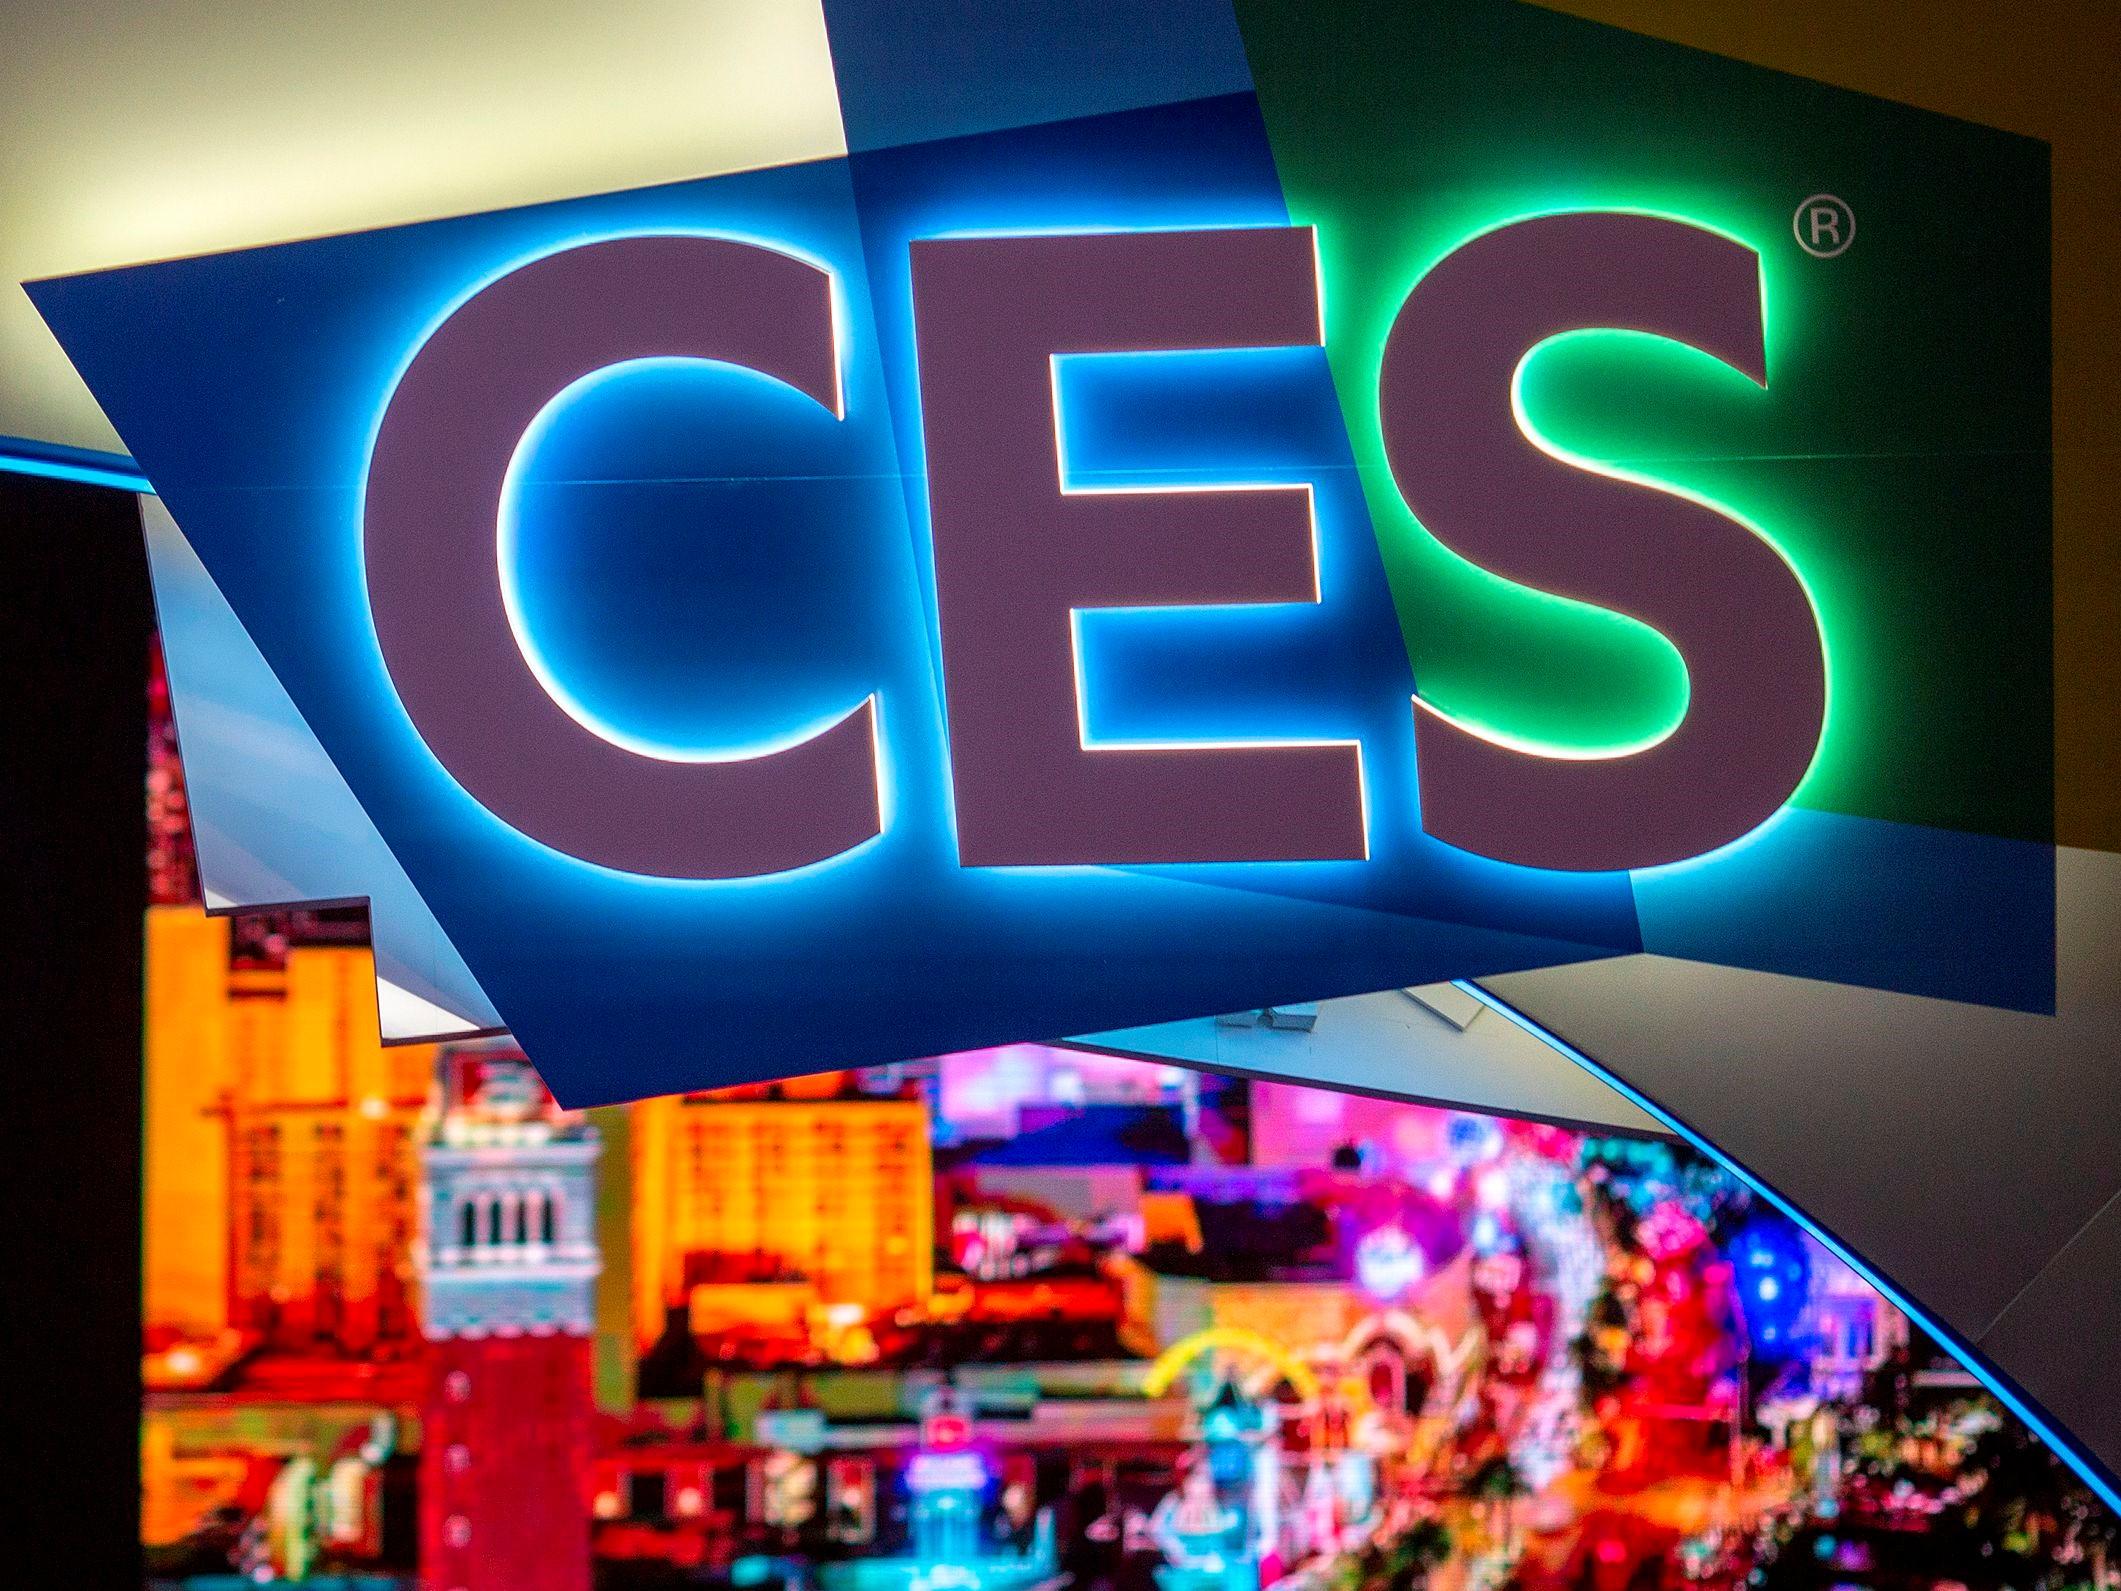 CES 2020 kicks off in Las Vegas, Nevada, on 7 January